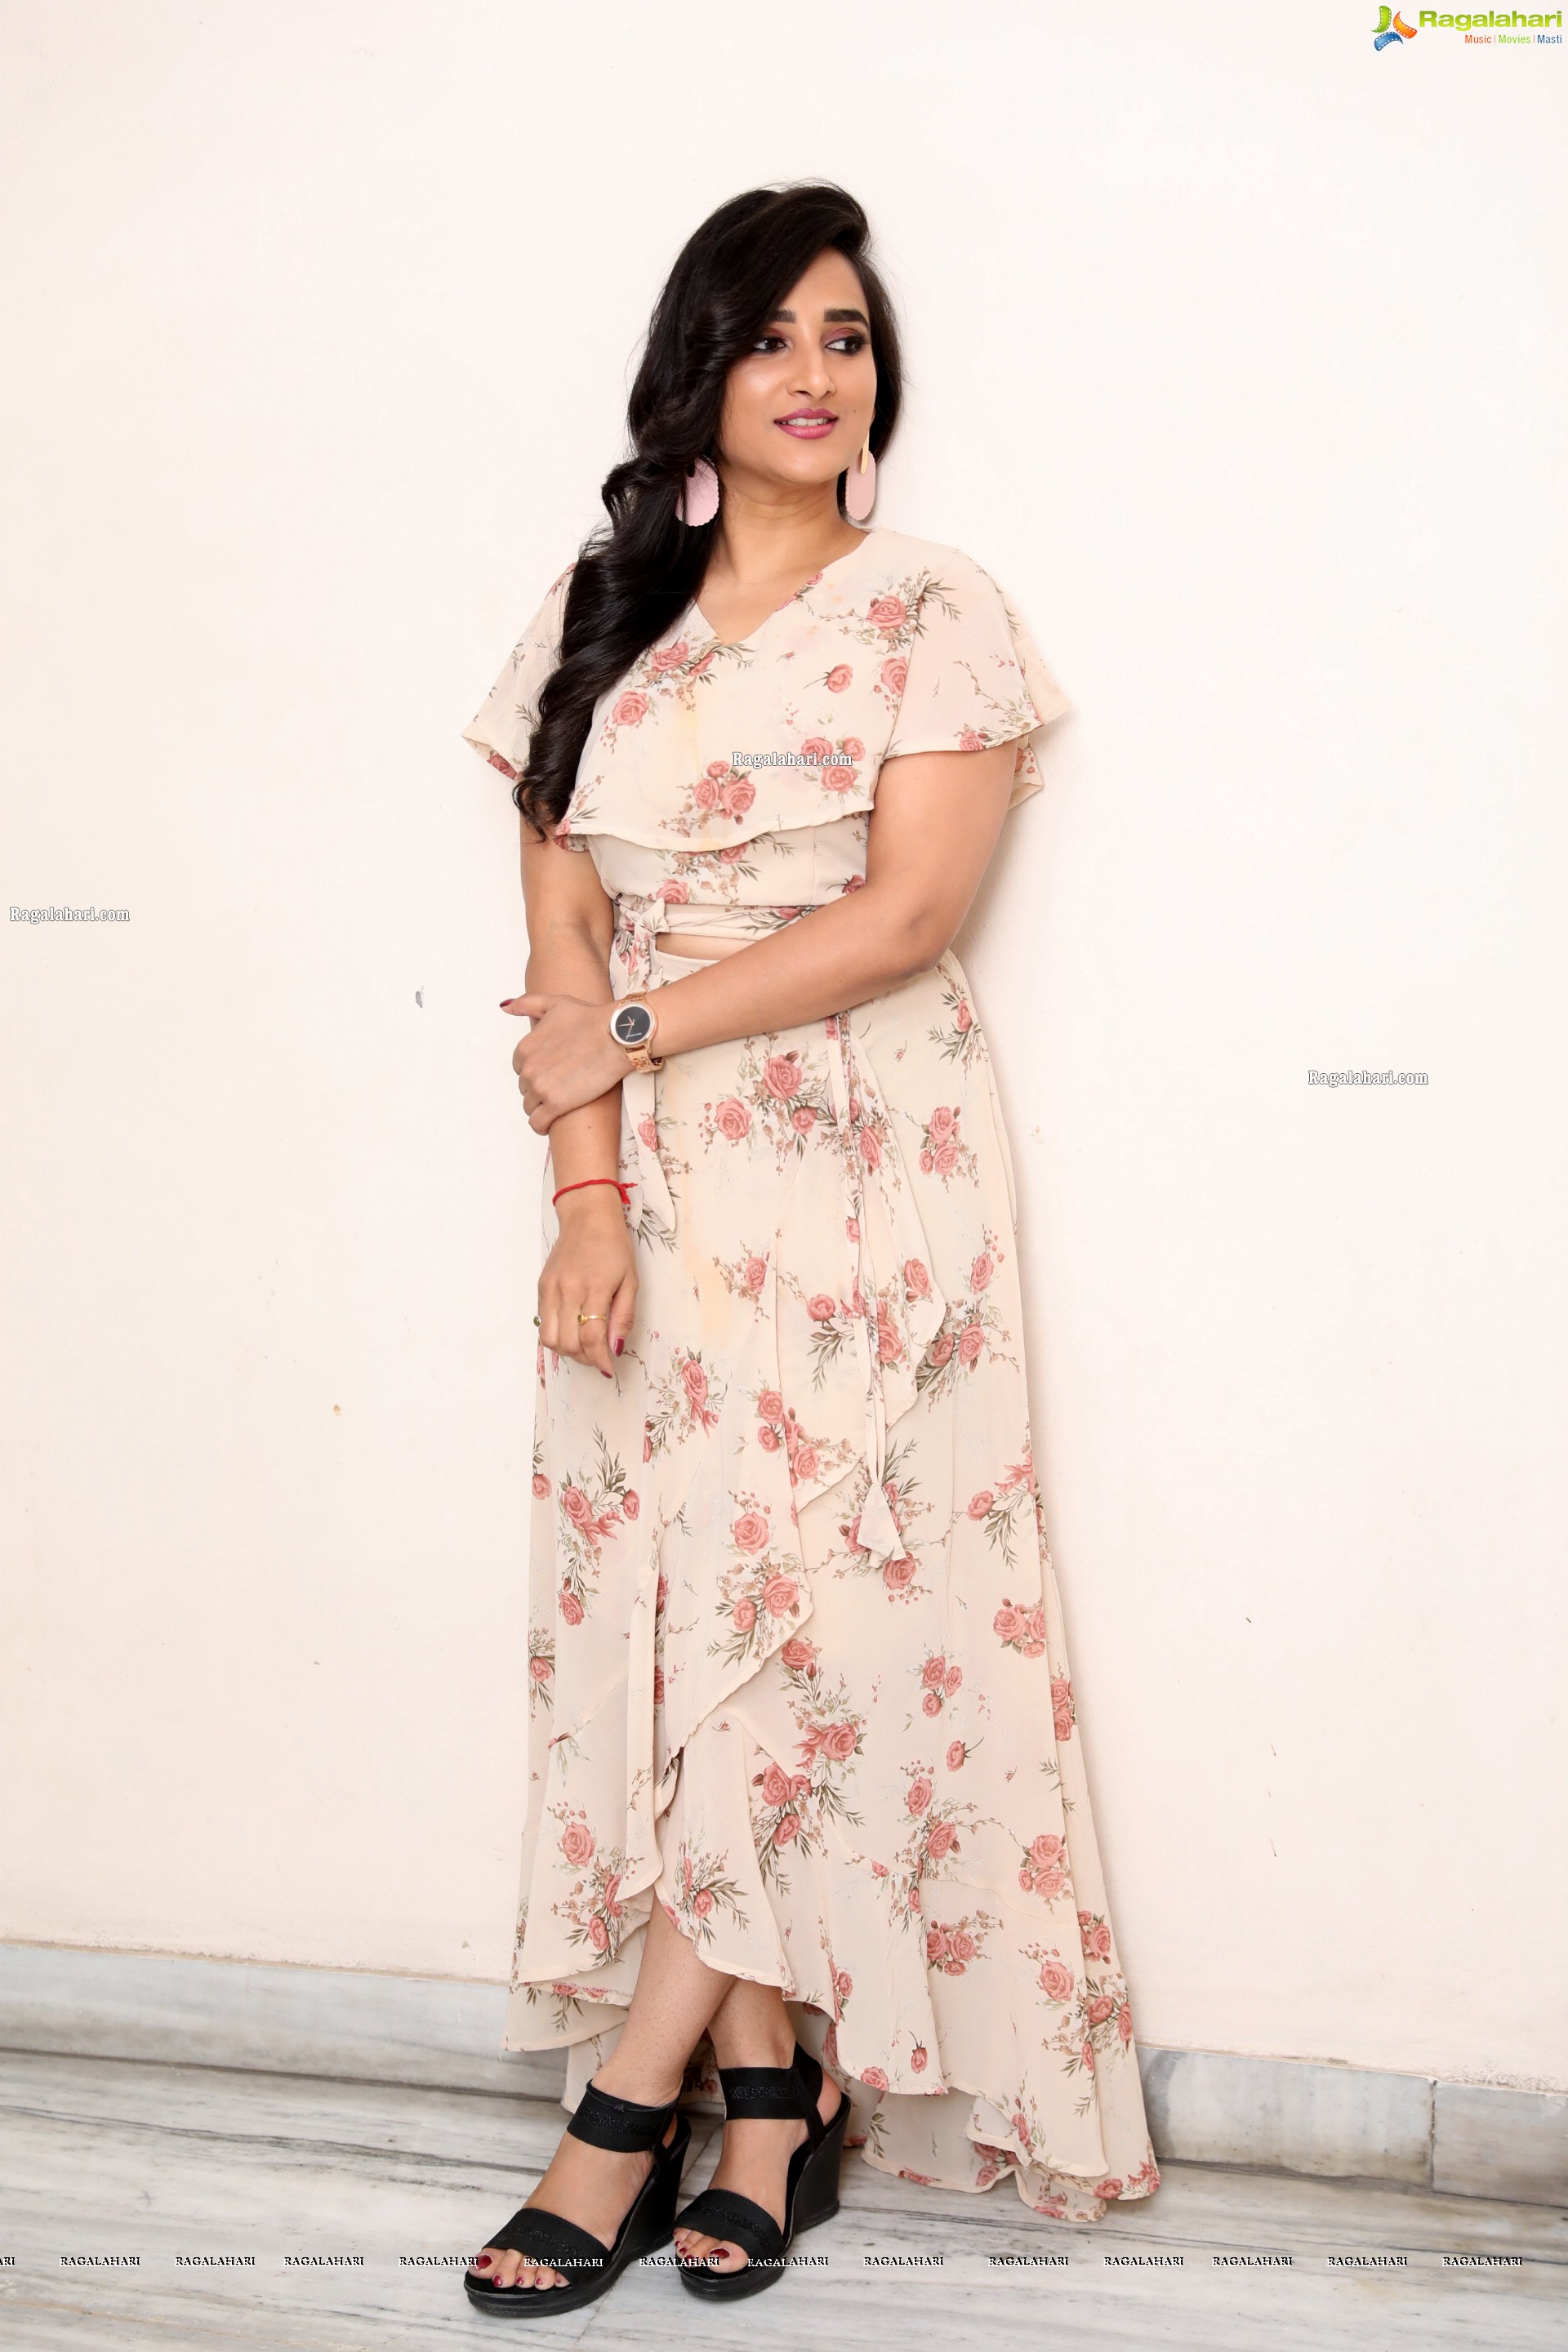 Madhu Krishnan in Beige Floral Frill Dress, HD Photo Gallery